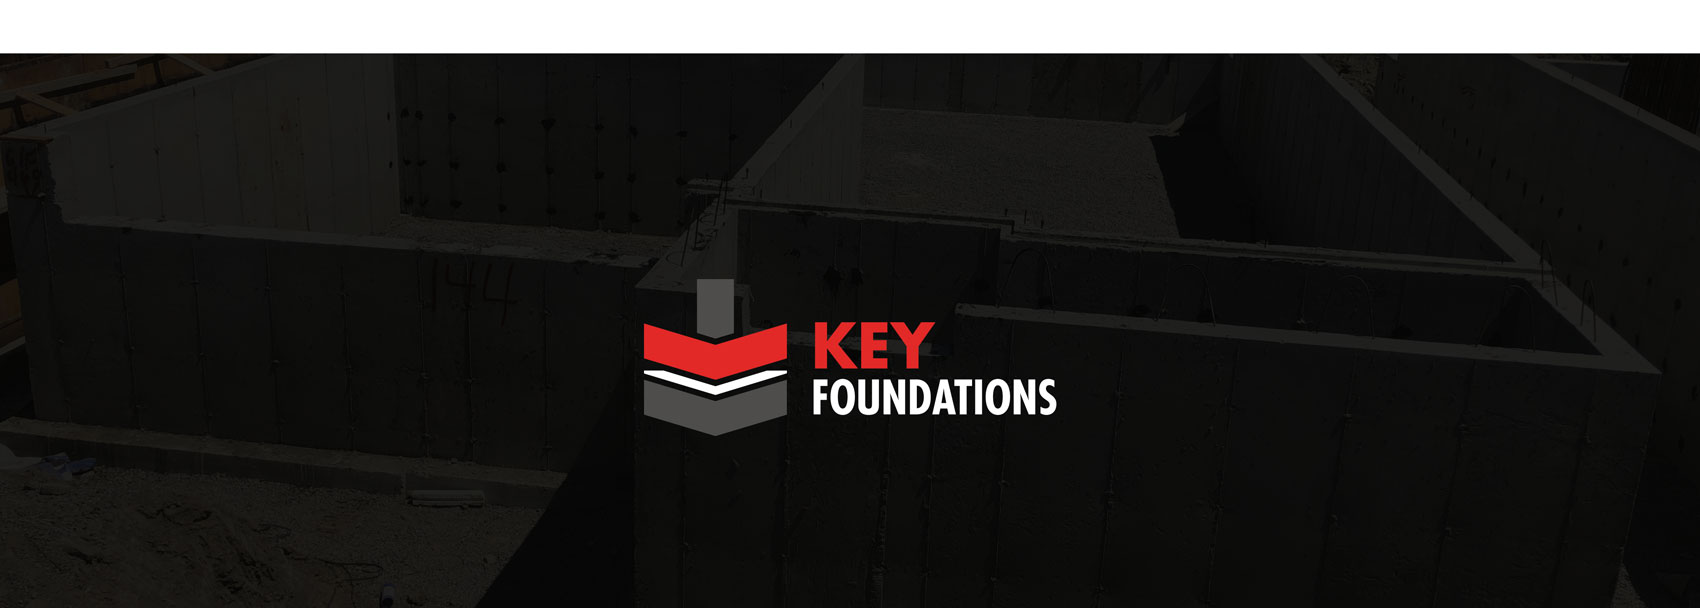 keyfoundations website